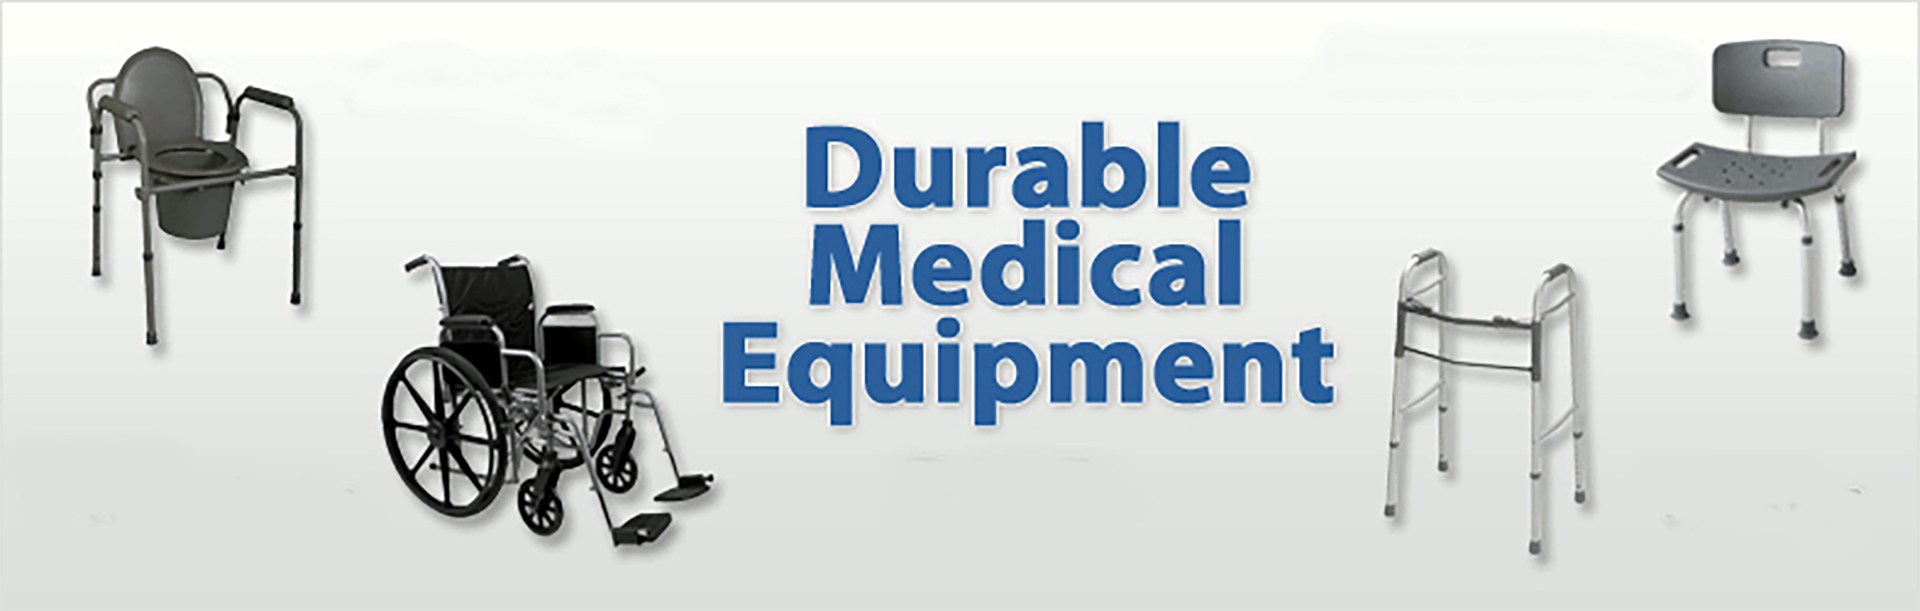 Durable-Medical-Equipment Banner